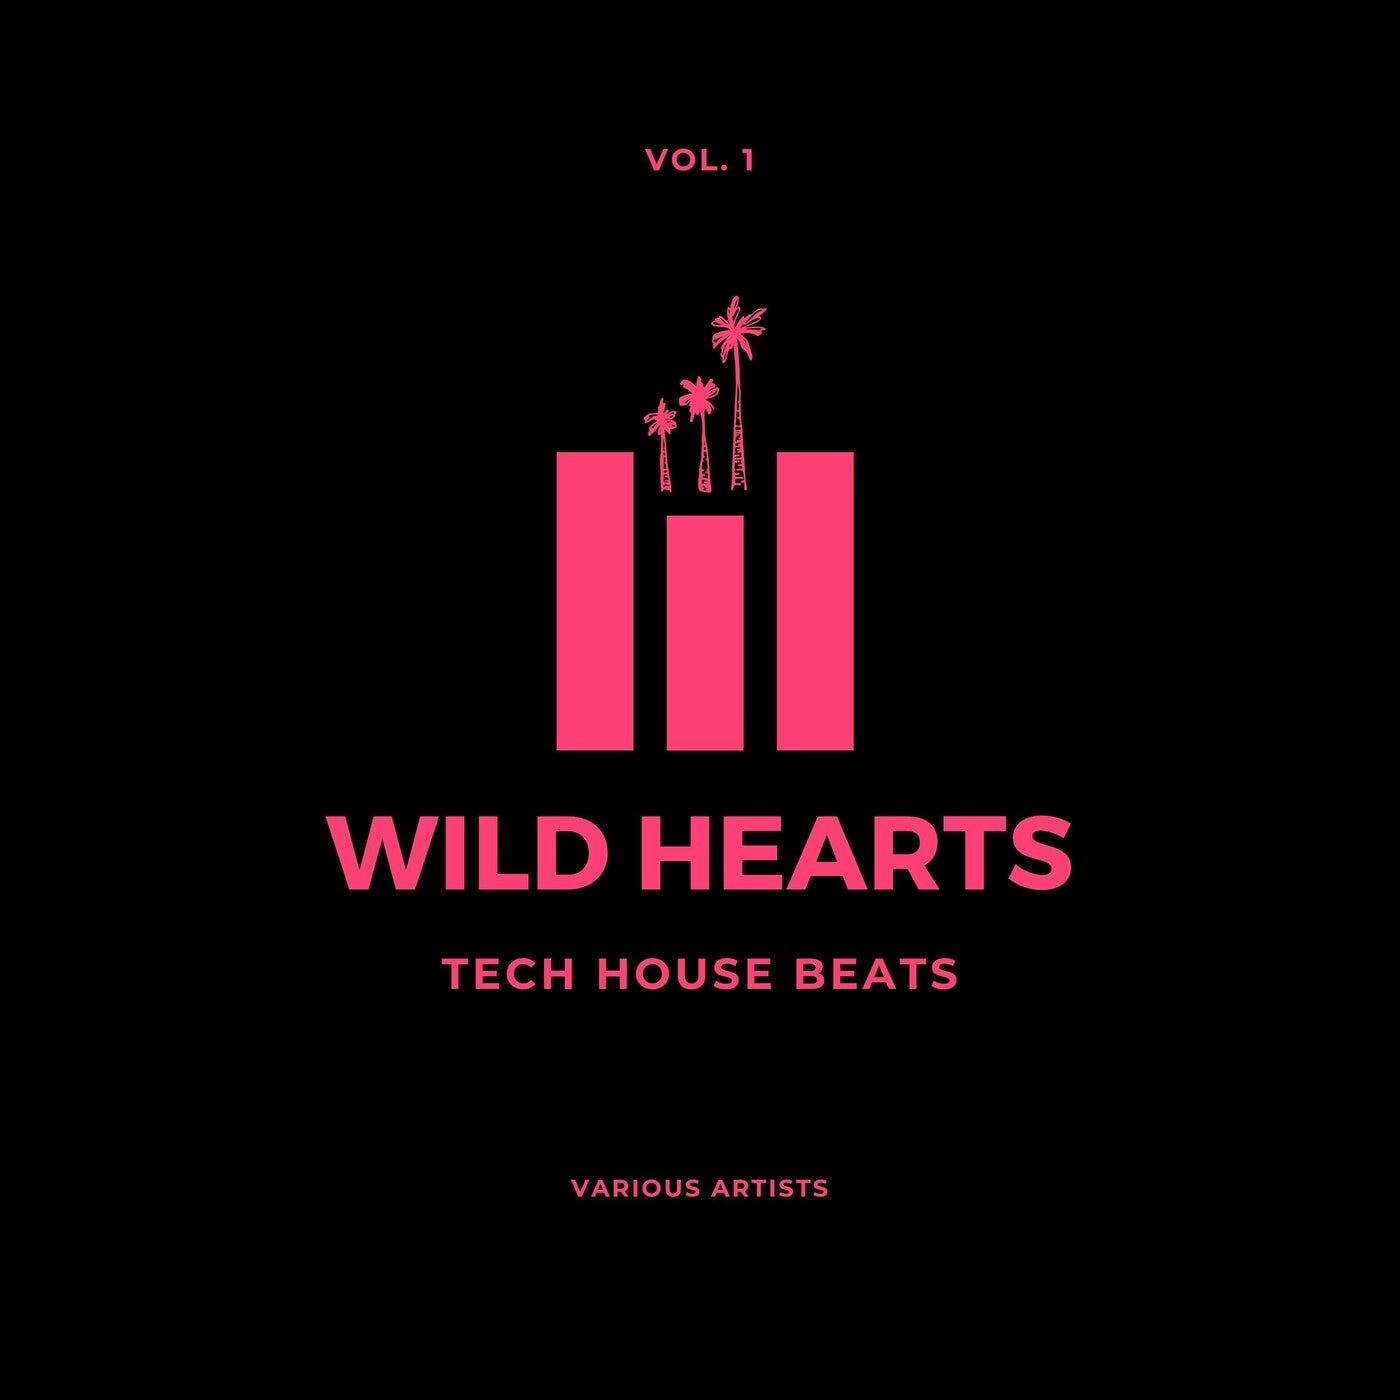 Wild Hearts (Tech House Beats), Vol. 1